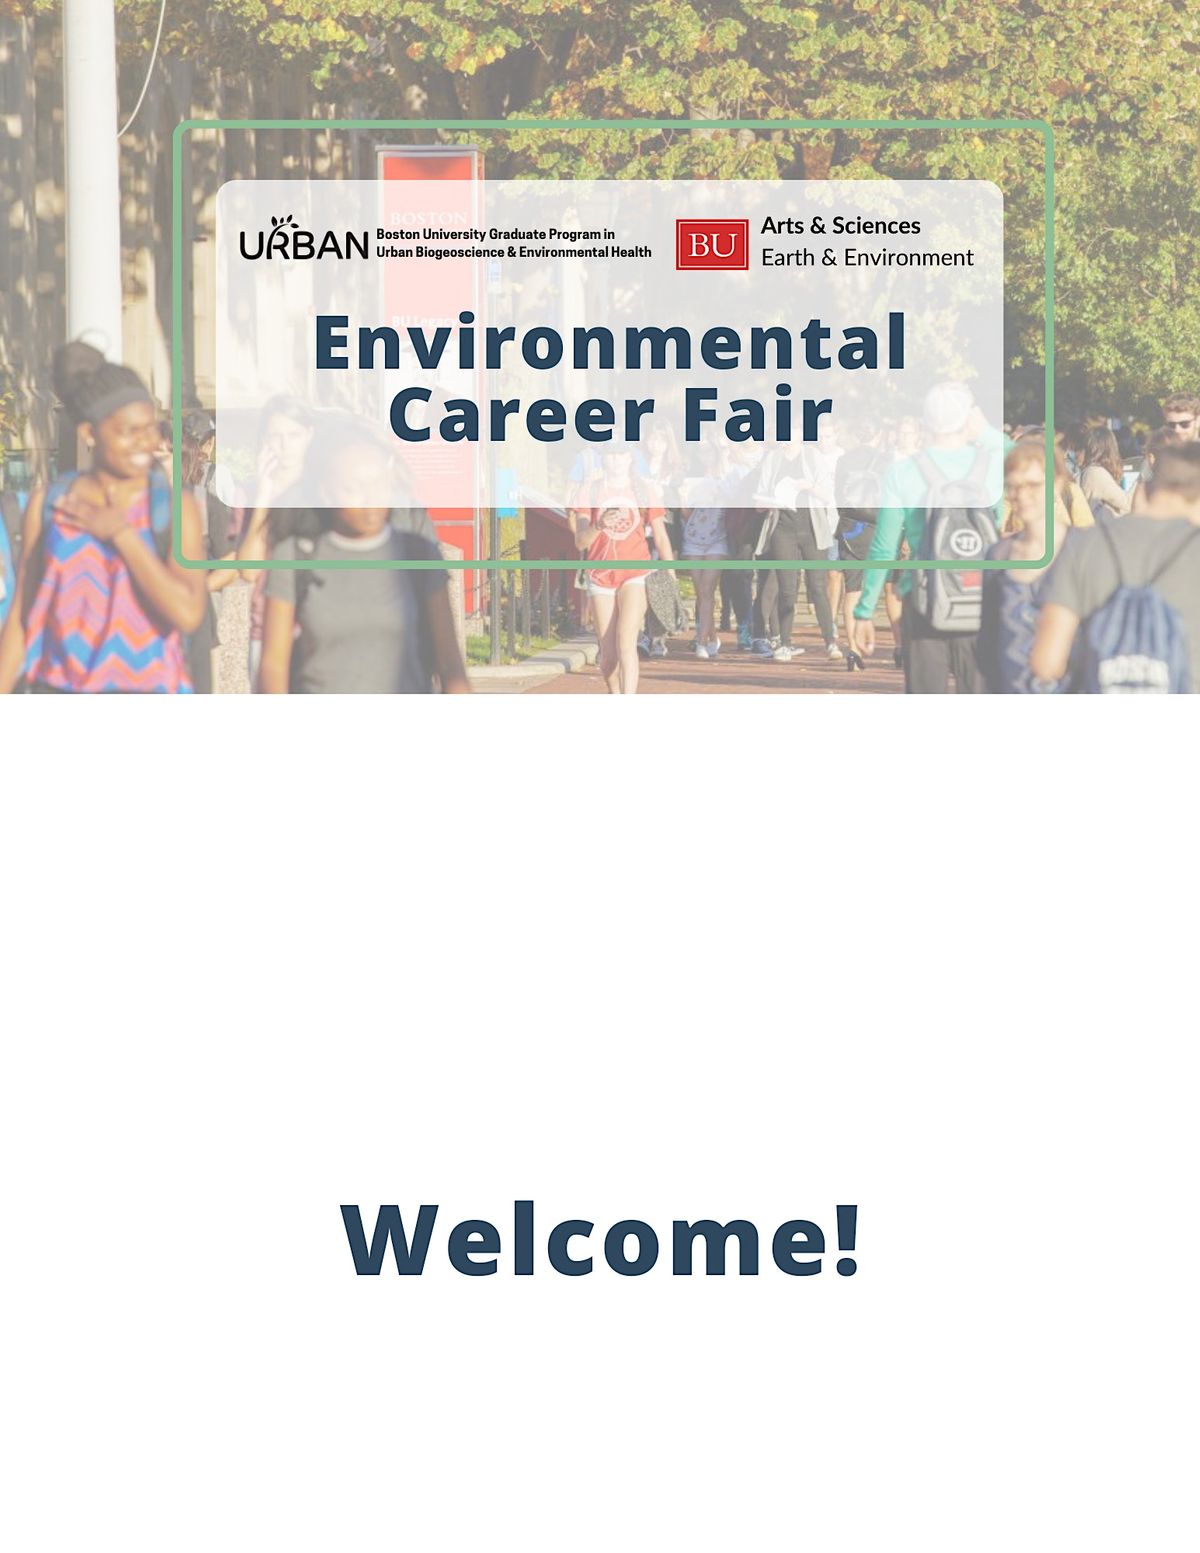 BU Earth & Environment and BU URBAN: Environmental Career Fair